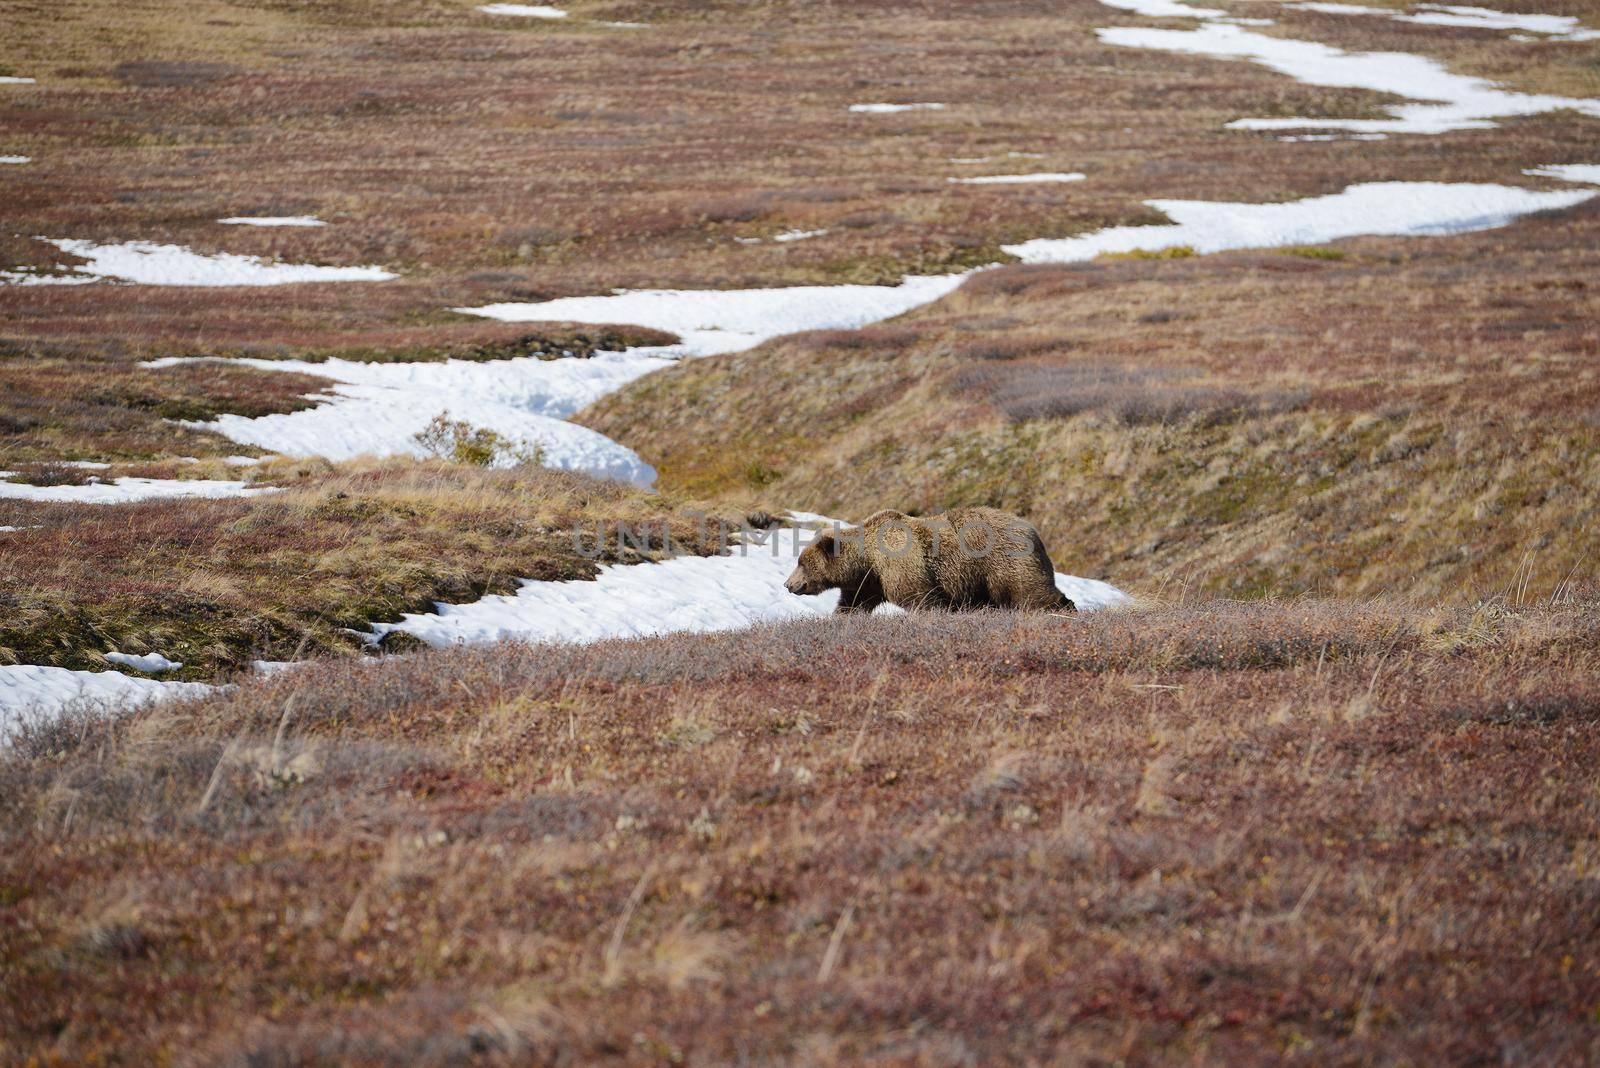 grizzly bear in denali by porbital